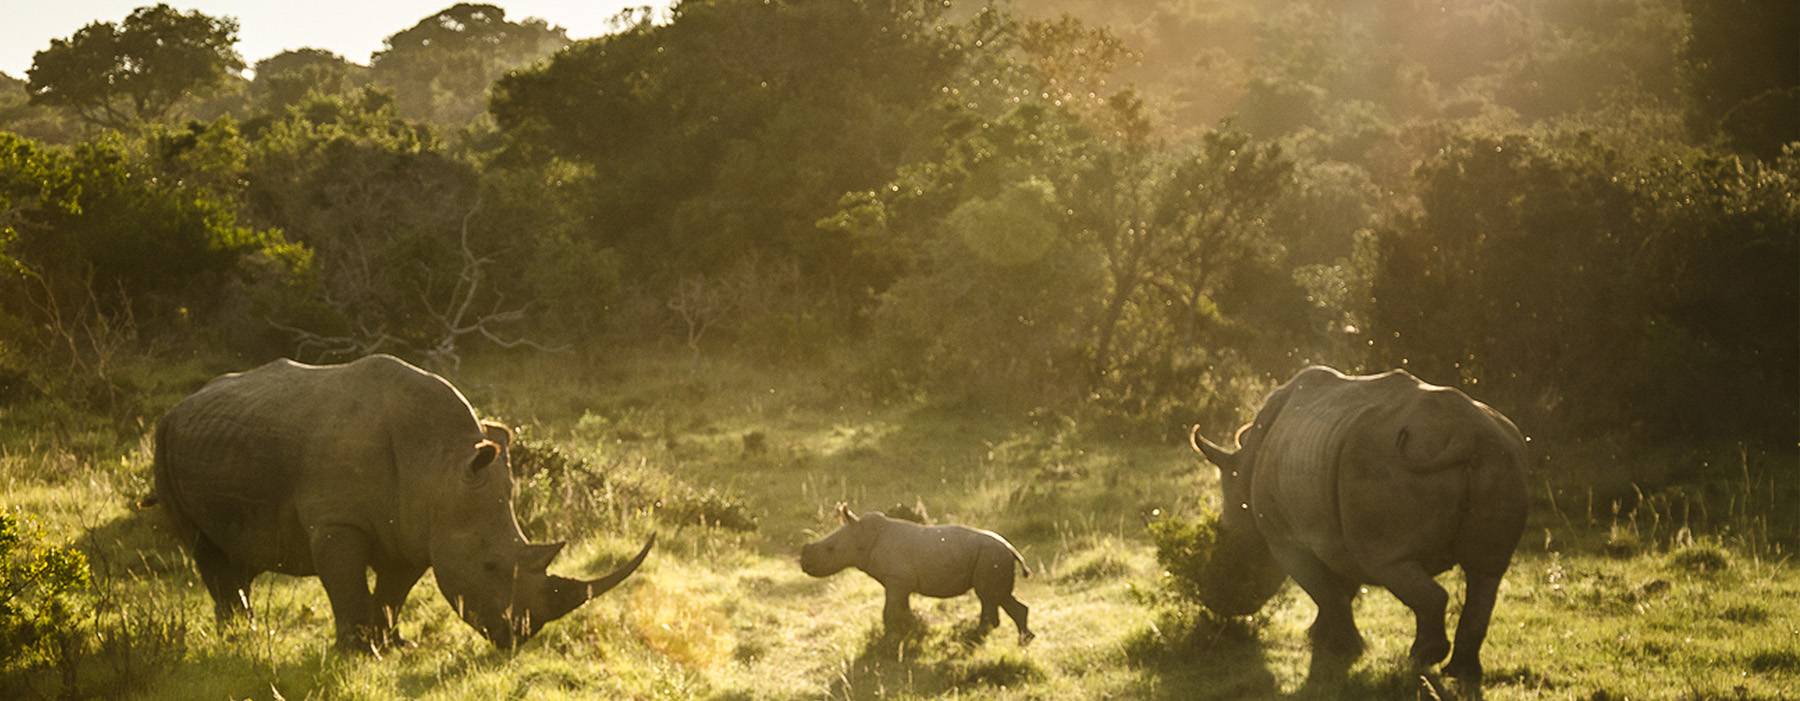 Nashorn-Familie
Artenschutz Pro Wildlife